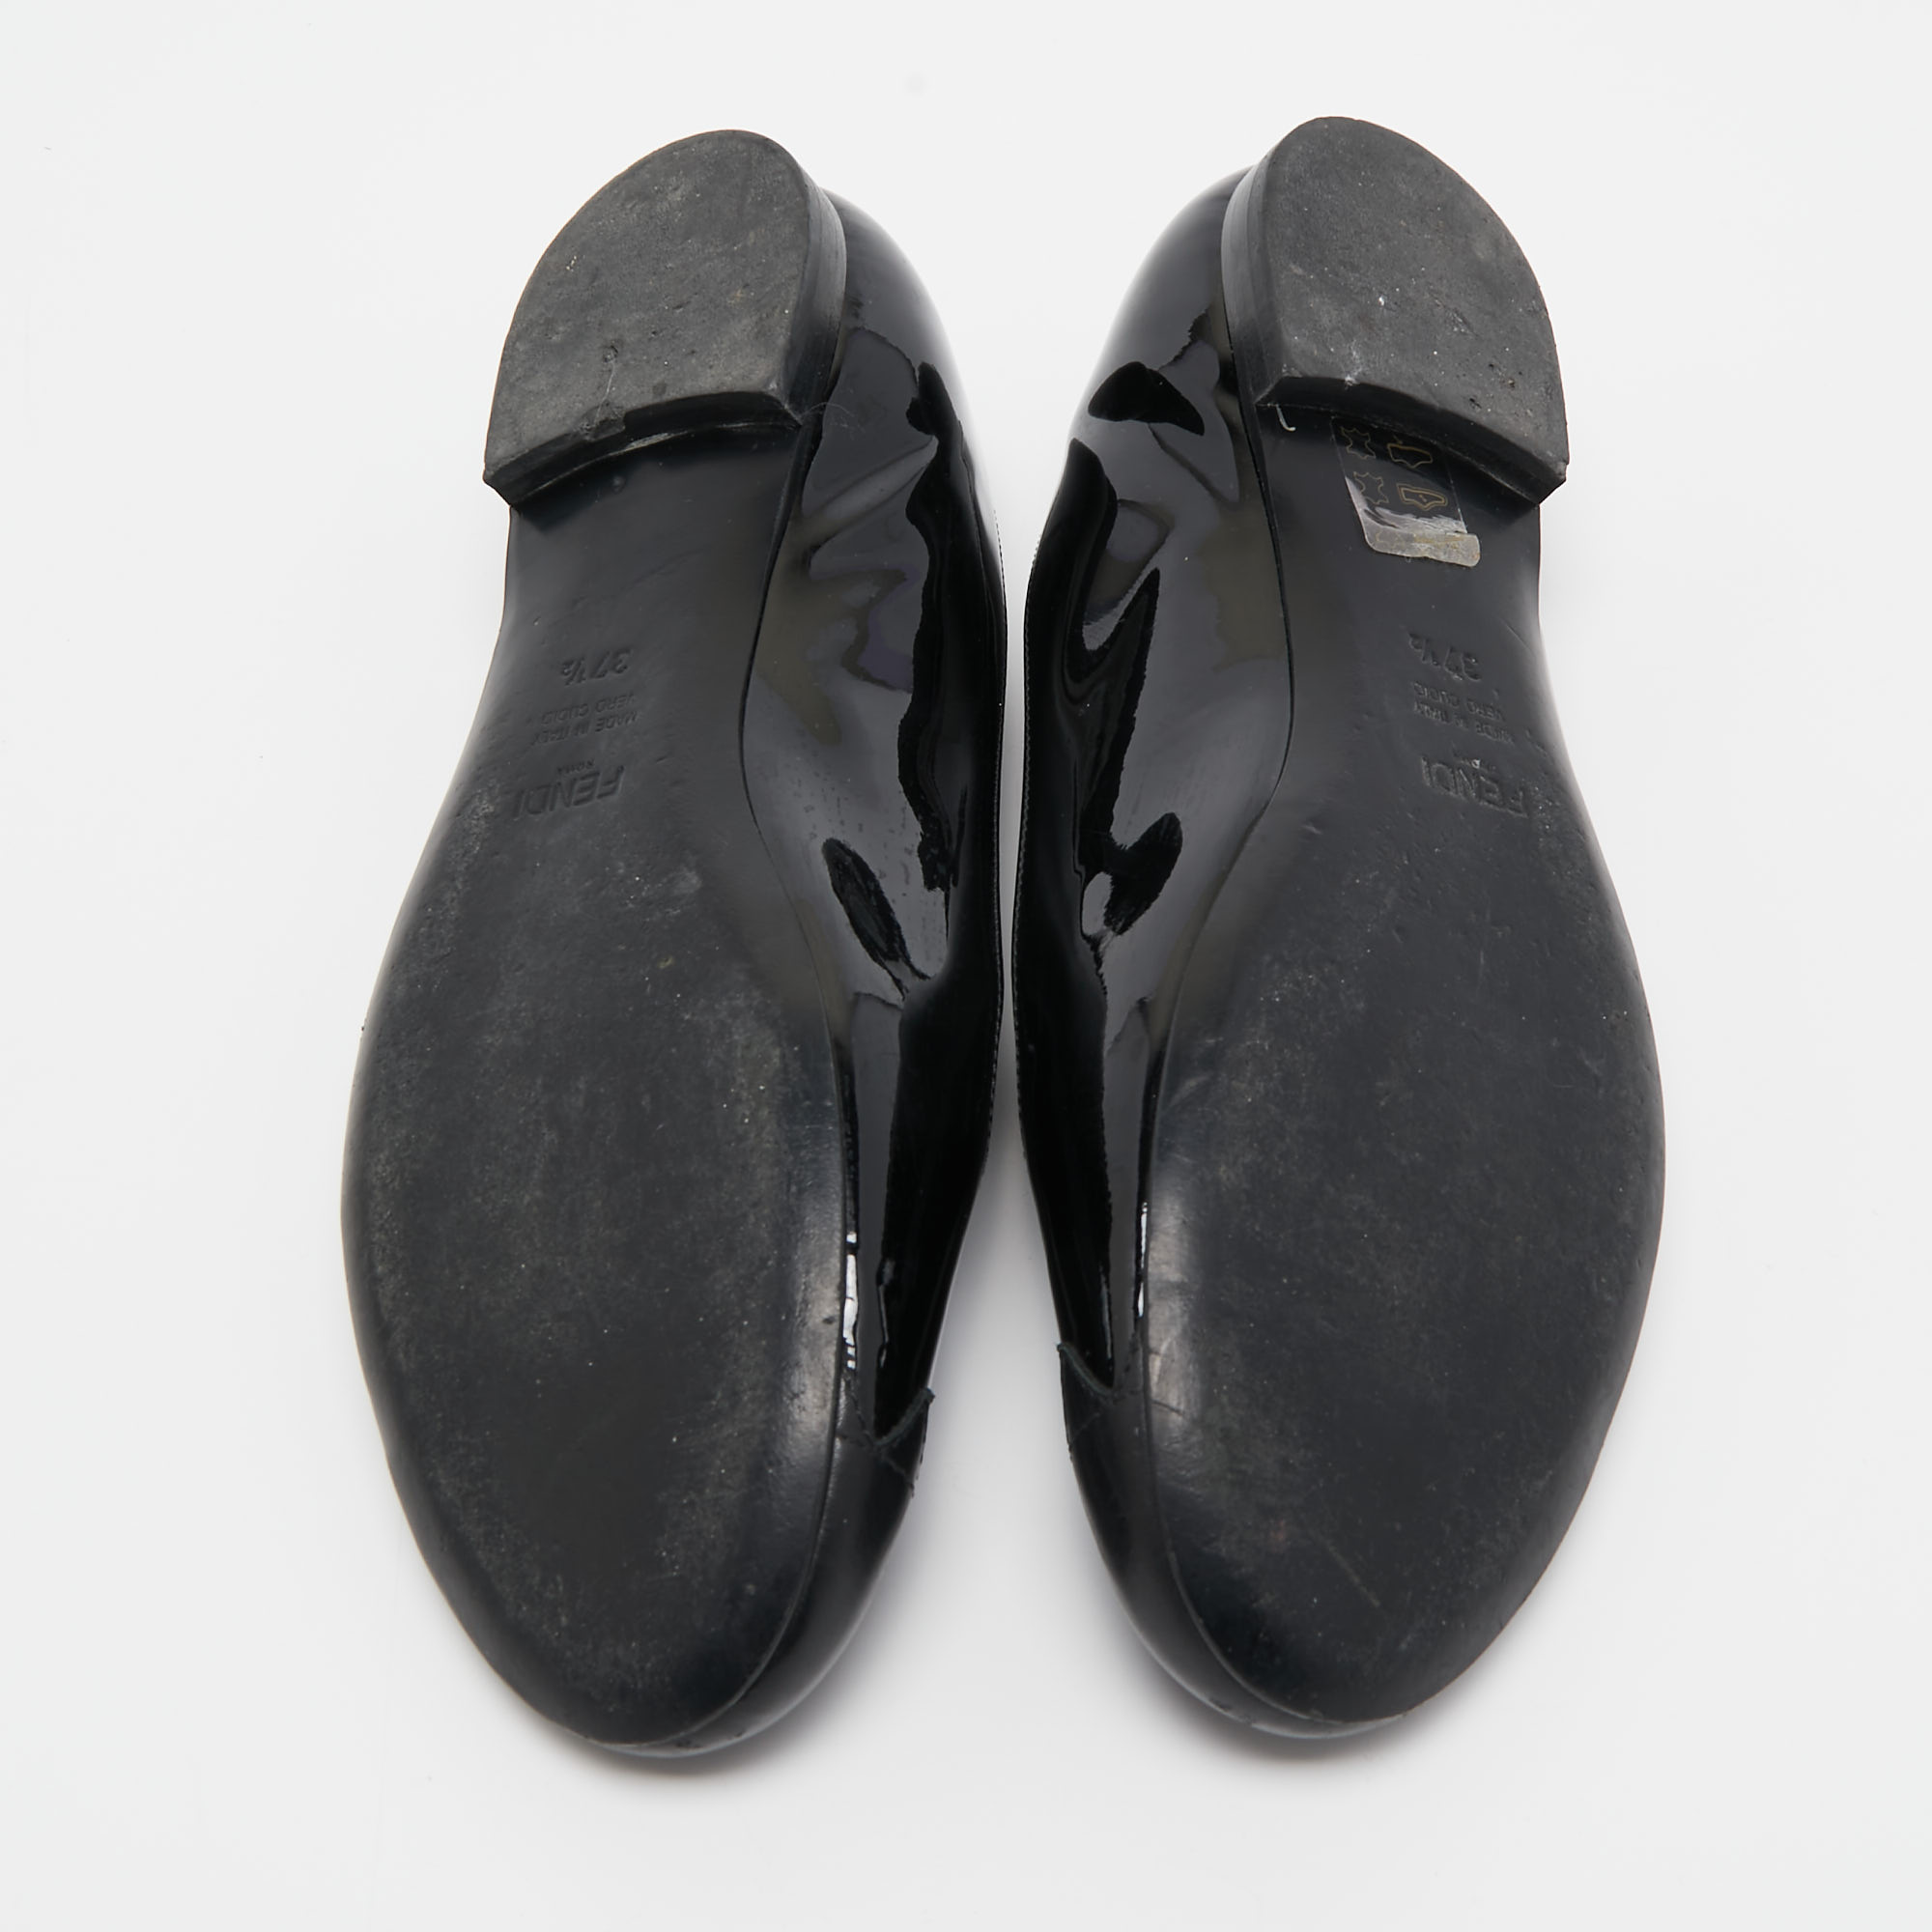 Fendi Black Patent Leather Cap Toe Ballet Flats Size 37.5